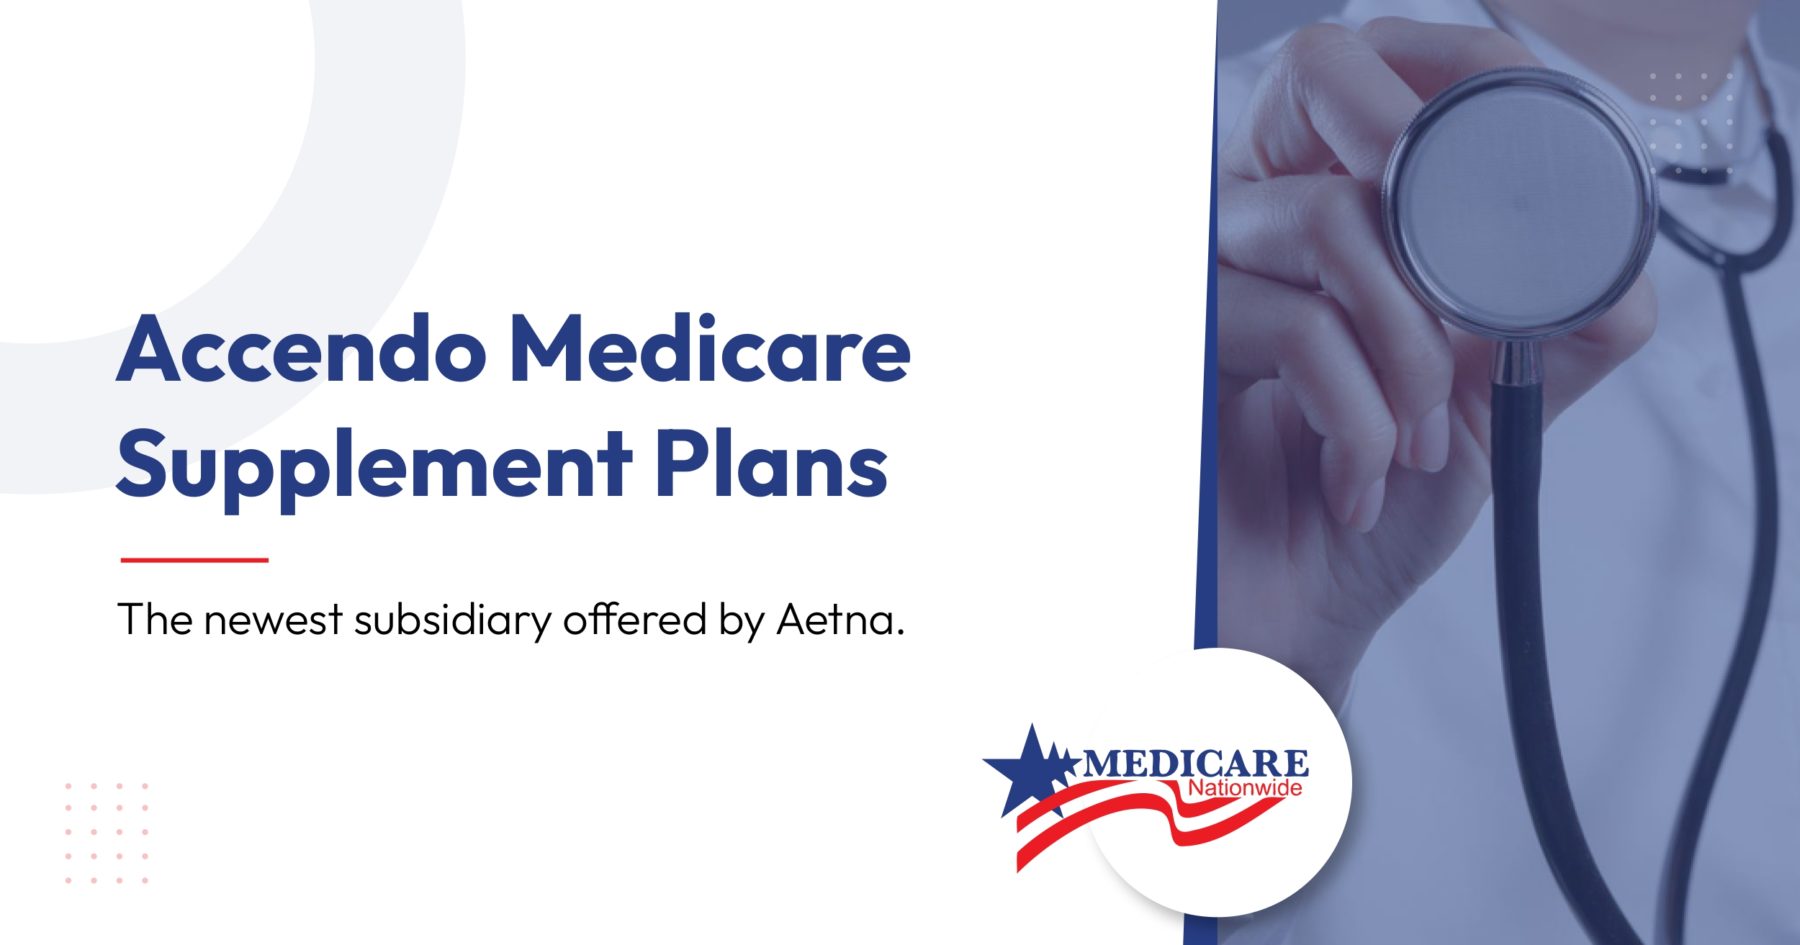 Accendo Medicare Supplement Plans